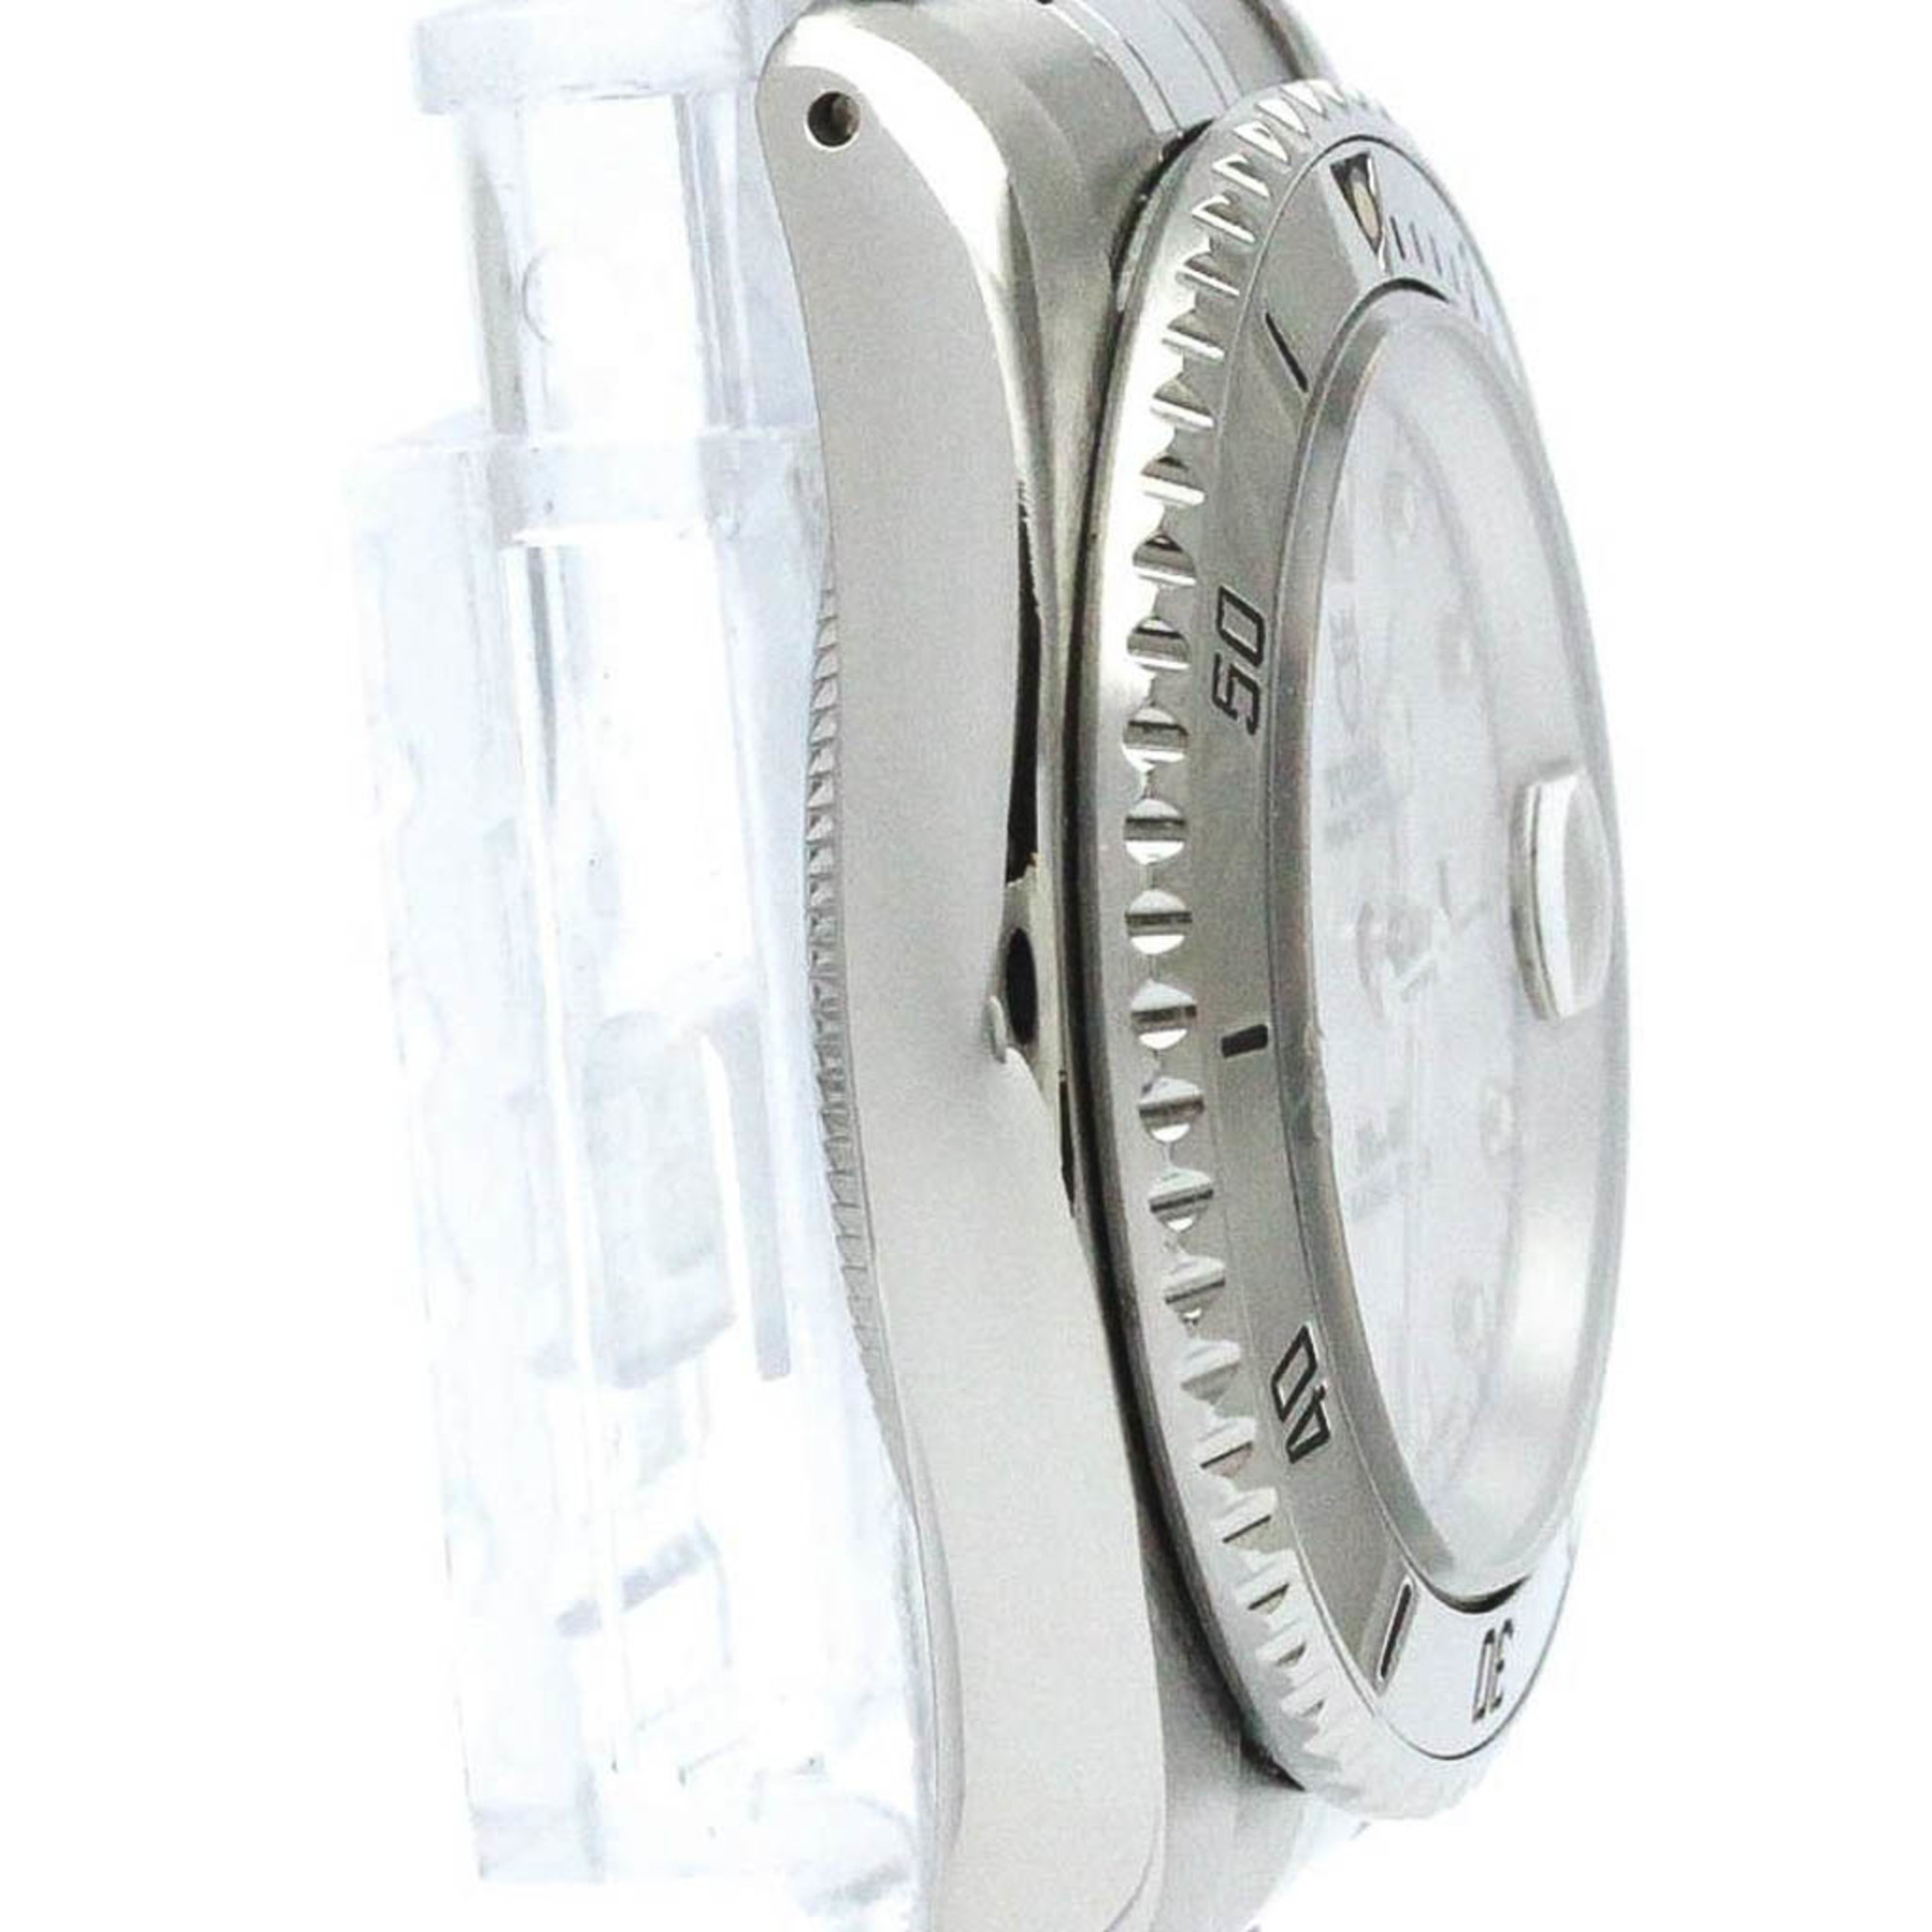 Polished TUDOR Prince Date MINI-SUB Steel Automatic Unisex Watch 73190 BF567380